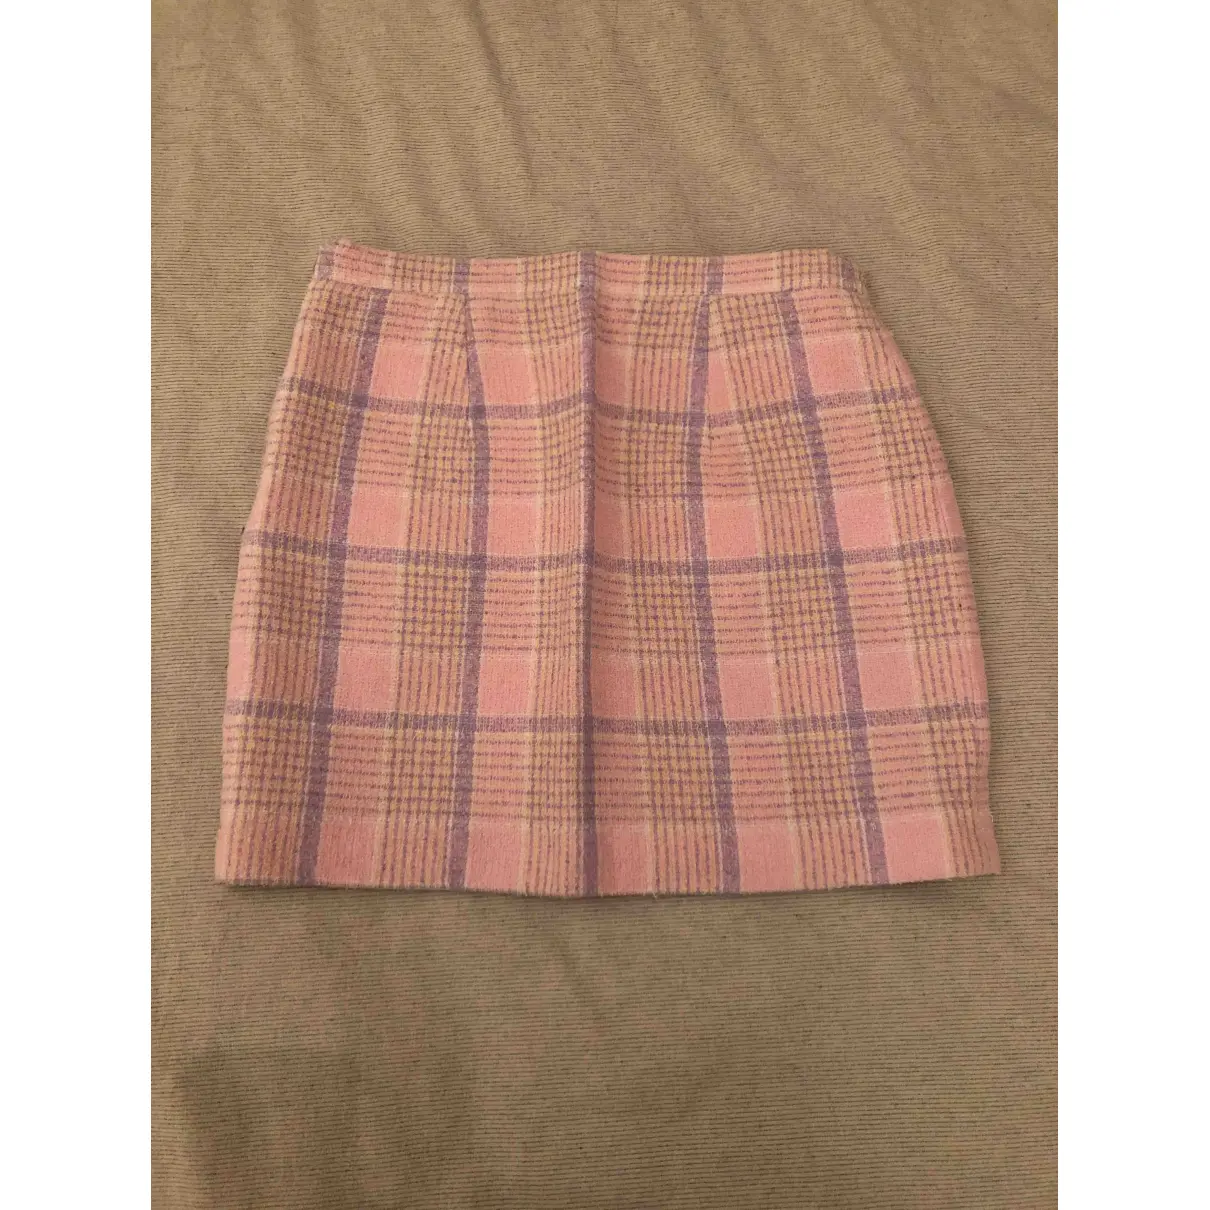 Buy Alessandra Rich Mini skirt online